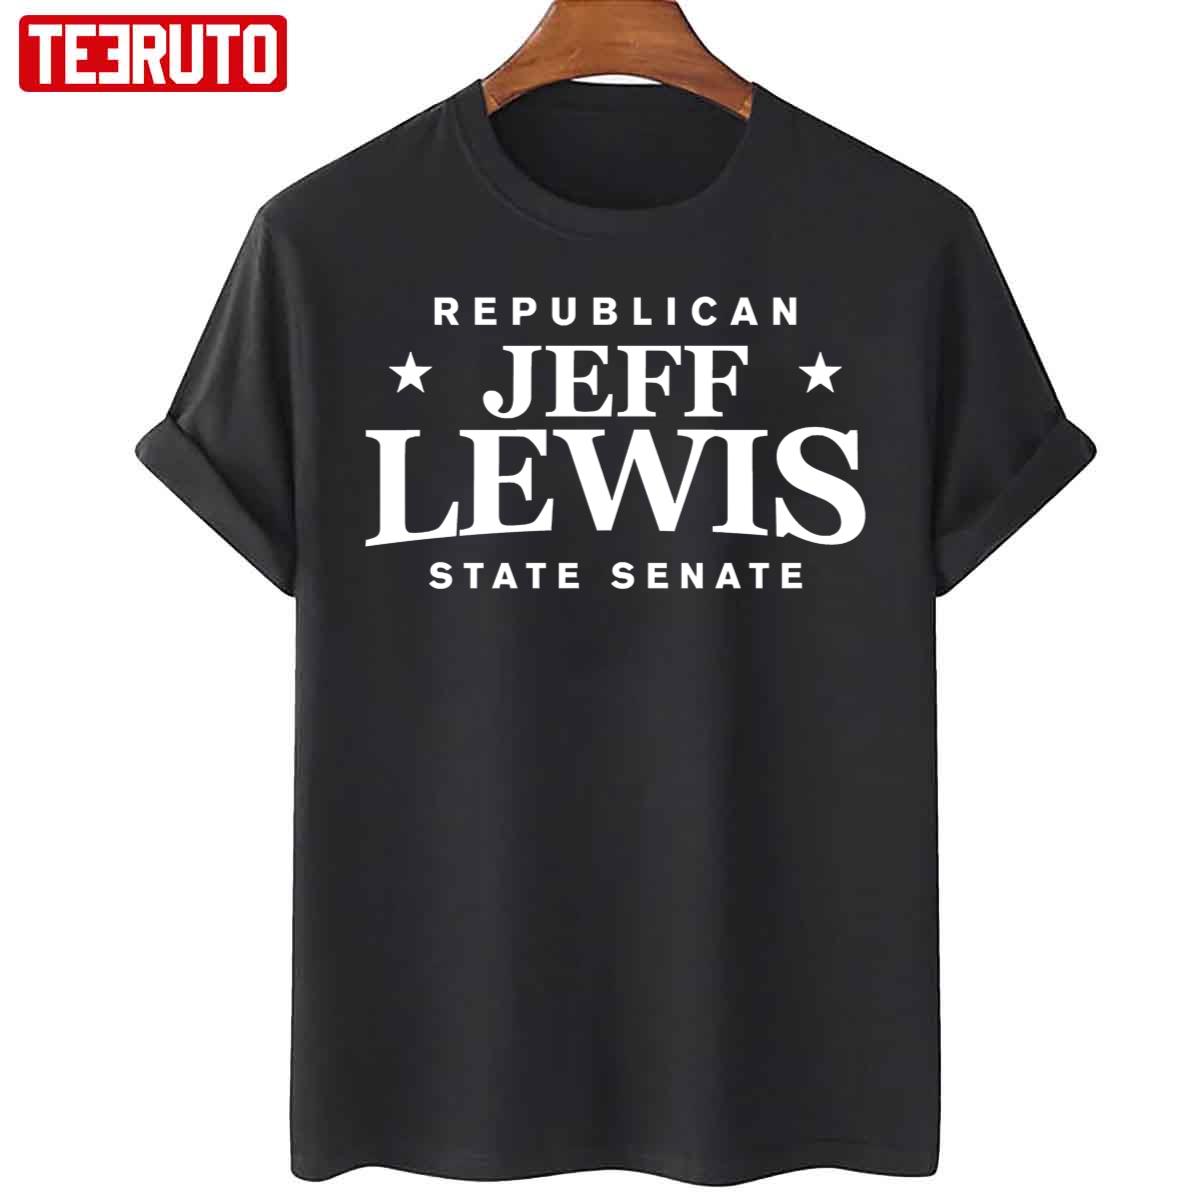 Republican Jeff Lewis State Senate Unisex T-Shirt